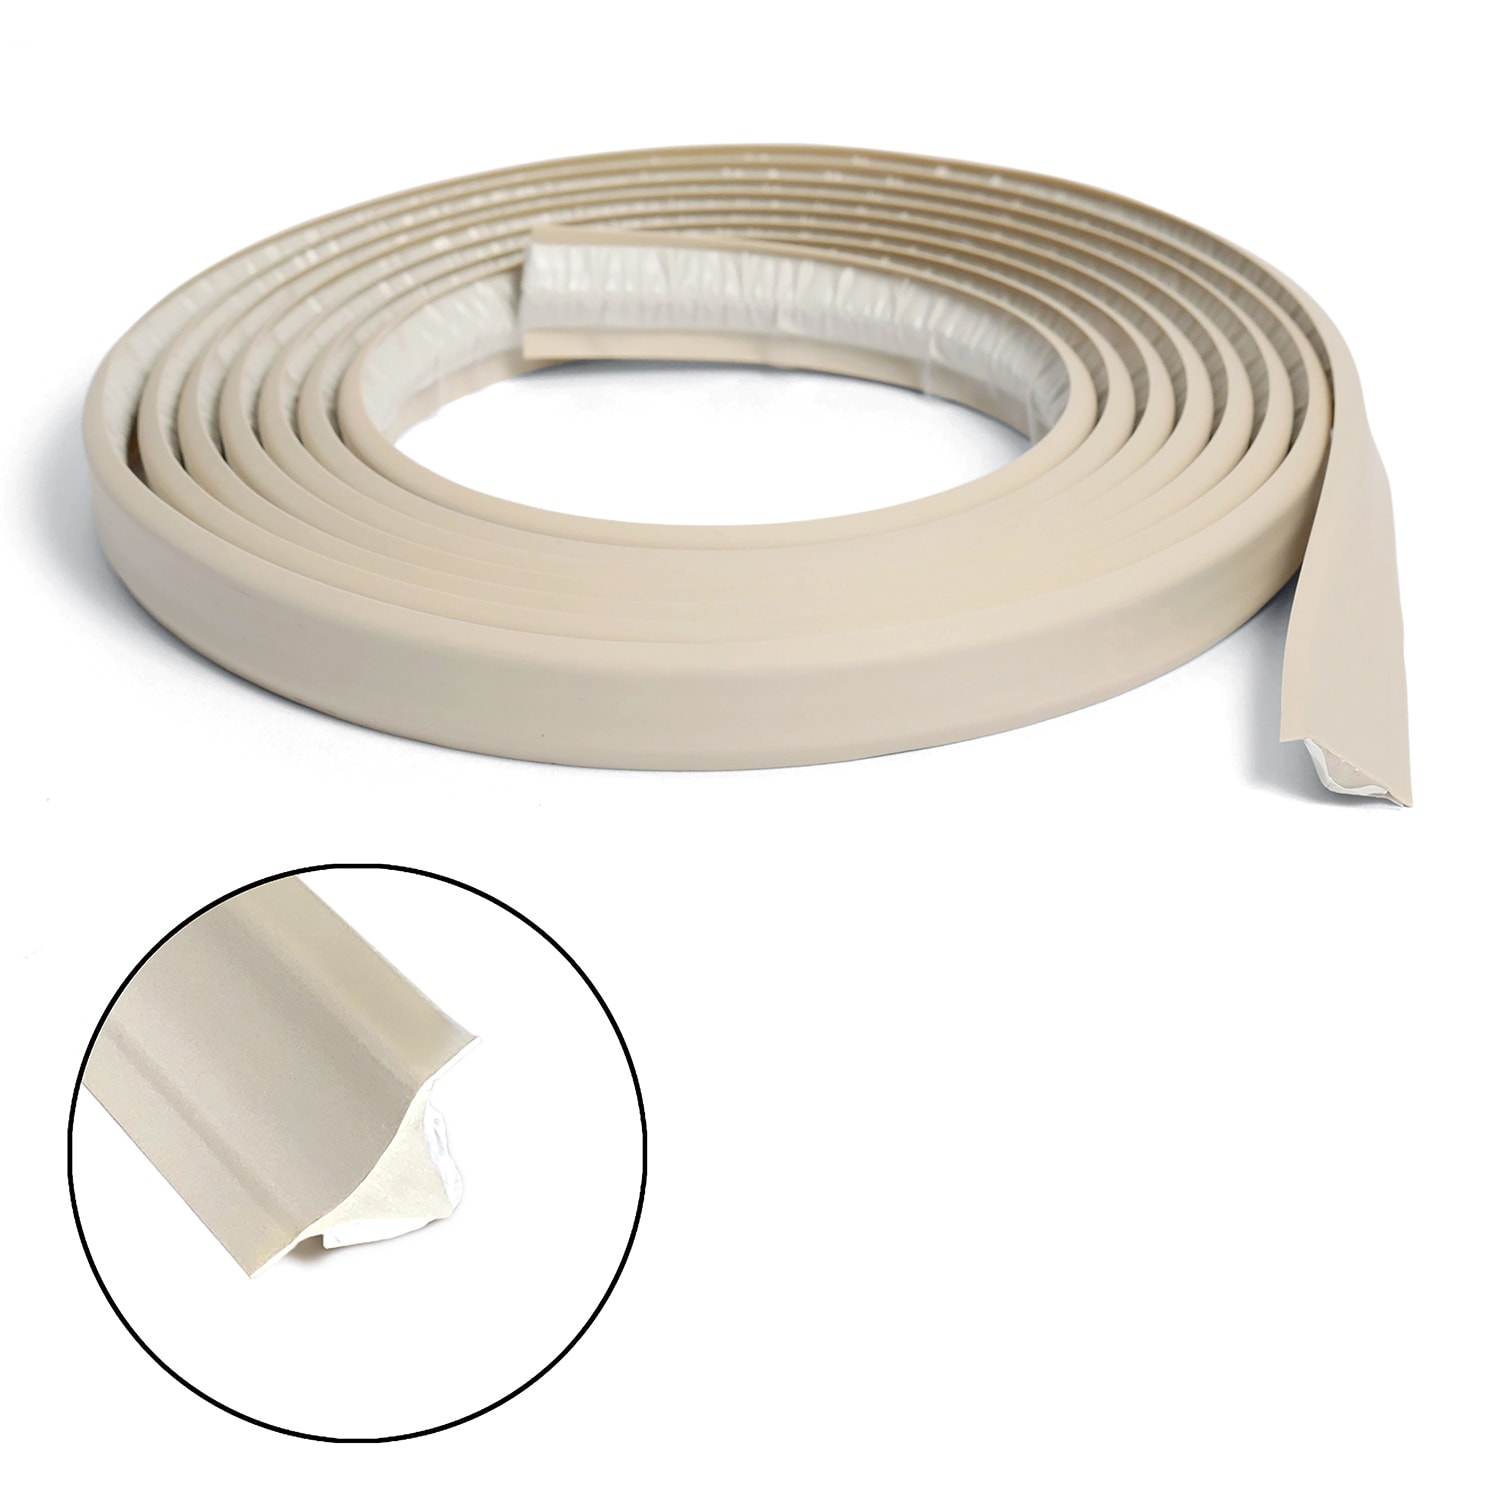 Magic White Shower Caulk Strip - Pre-shaped, Flexible Trim with Butyl  Adhesive - Mildew Resistant - Easy Alternative to Regular Caulk in the  Caulk Strips department at